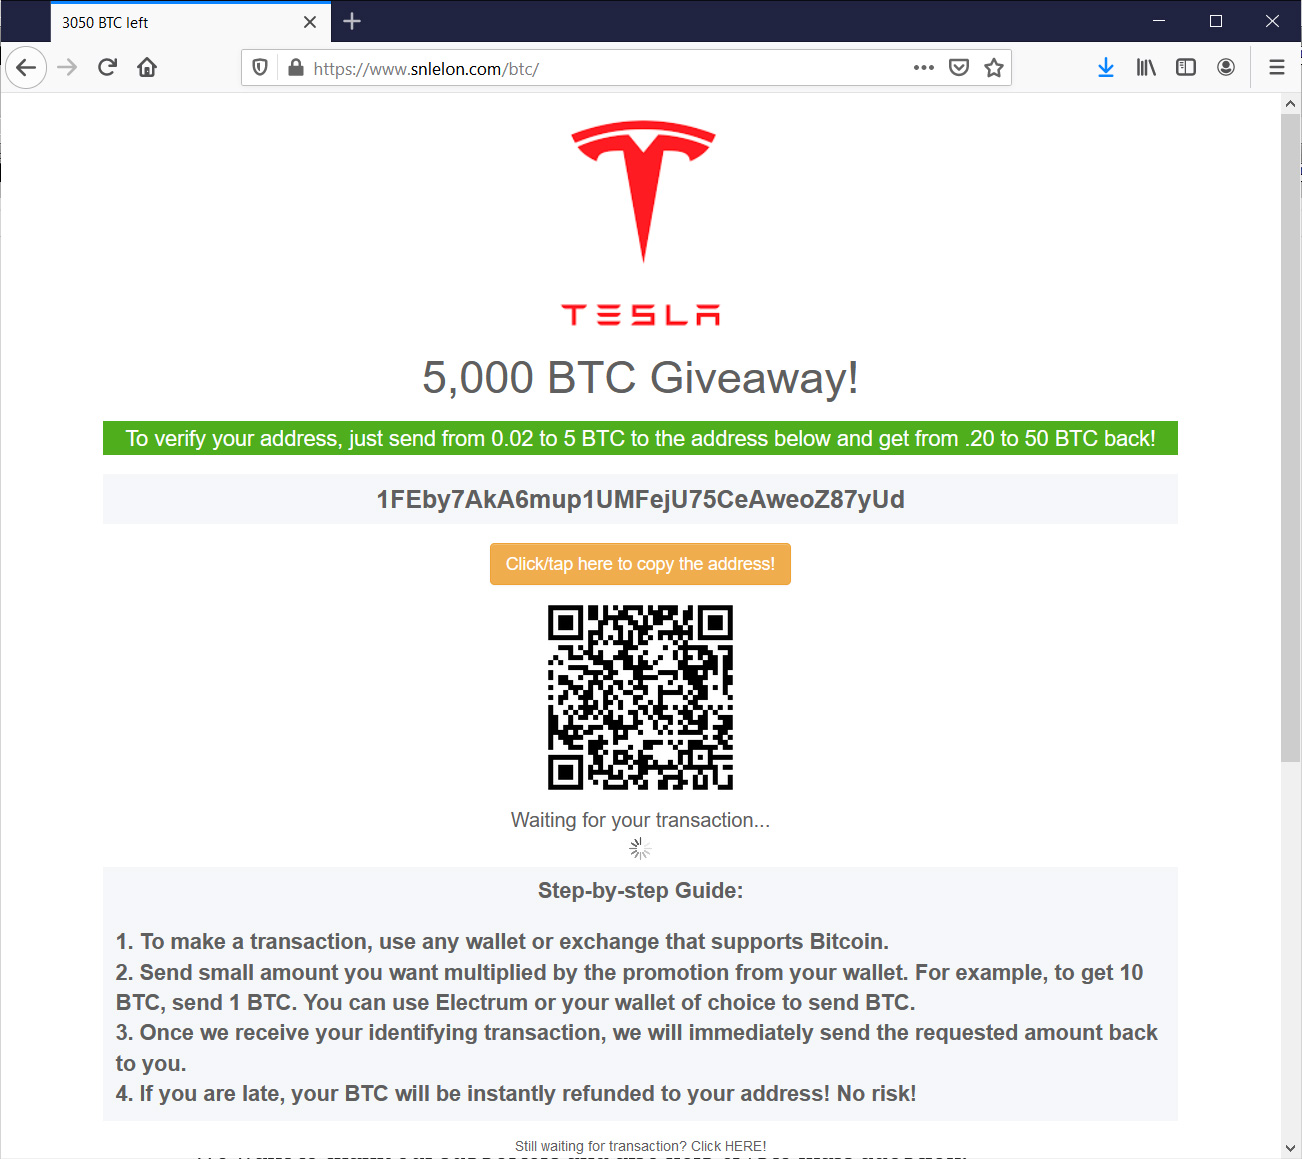 Fake Tesla Bitcoin giveaway page